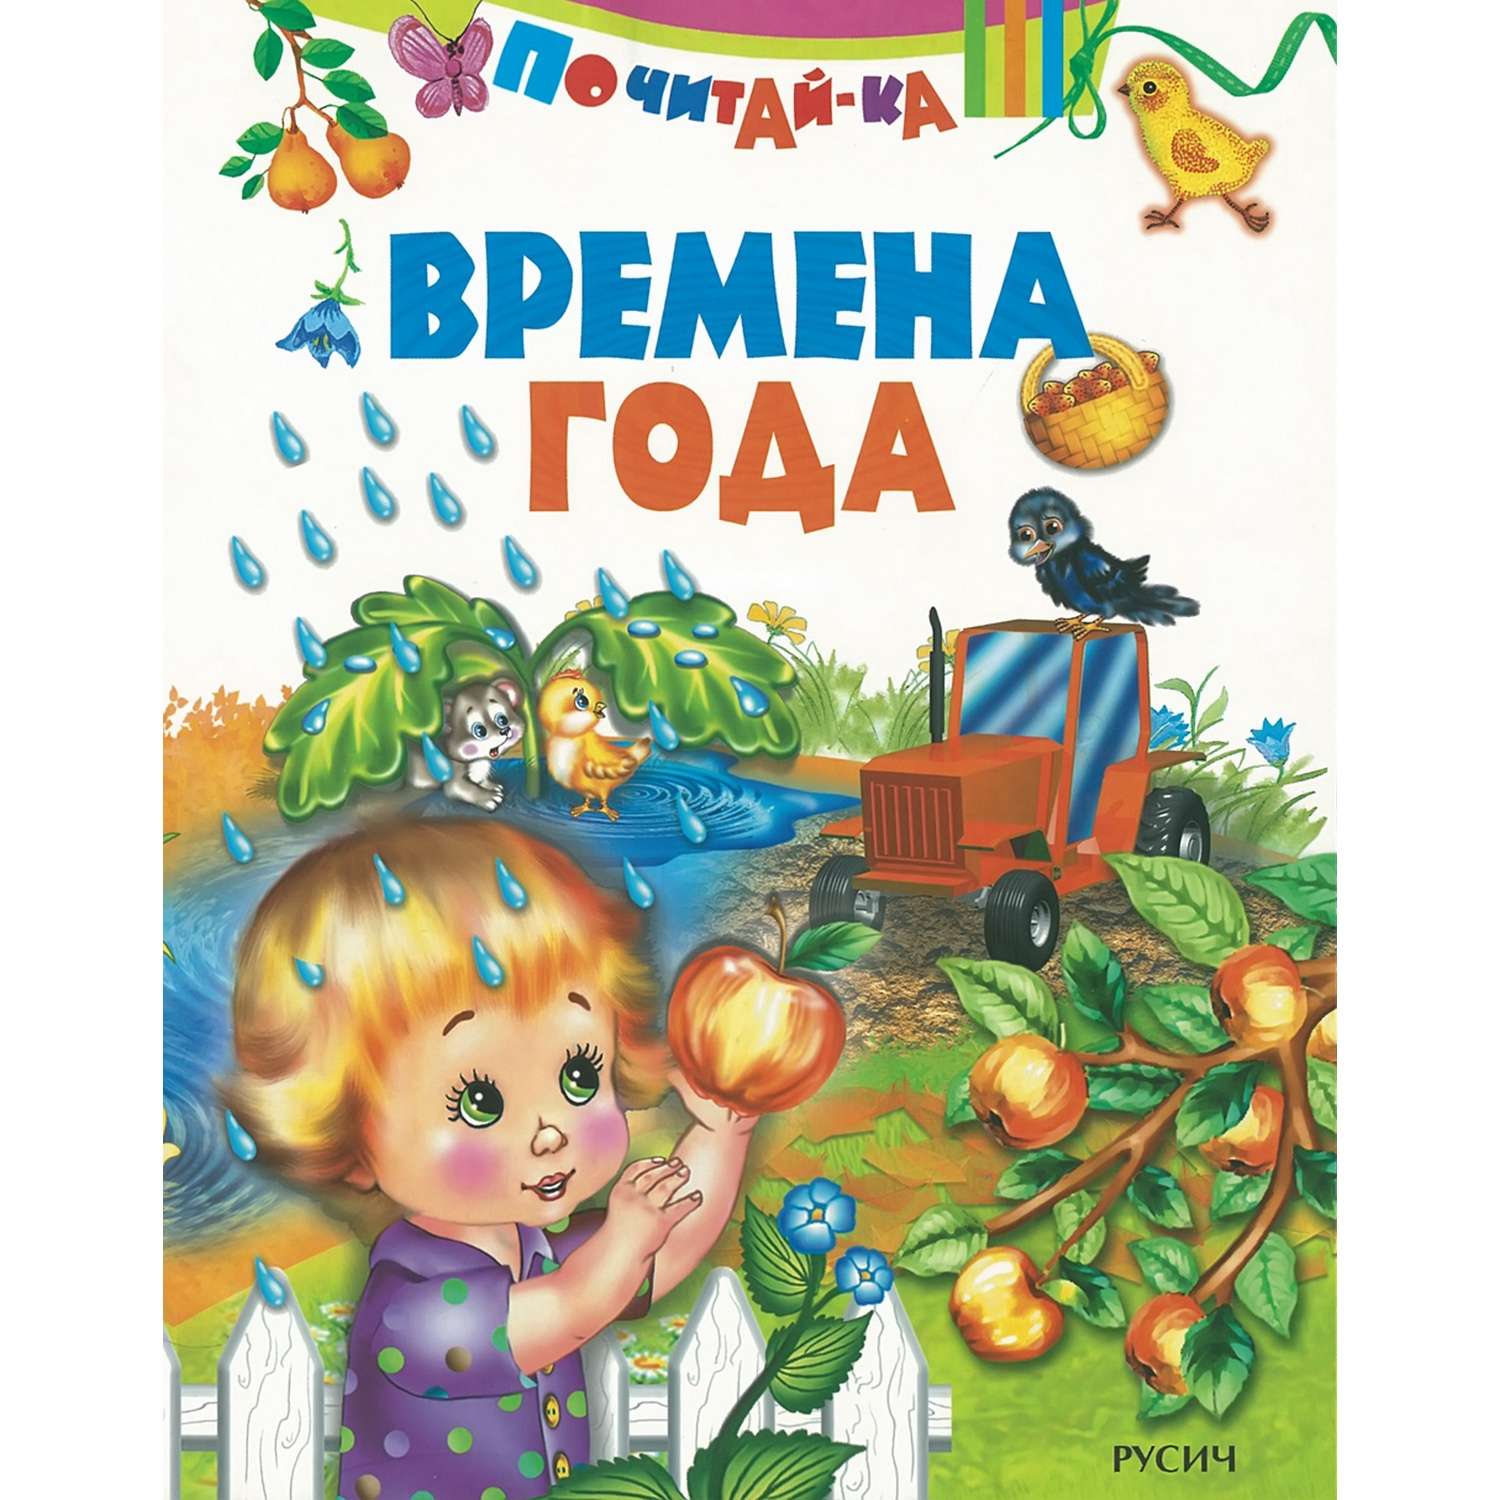 Книга Русич Времена года. Детские стихи - фото 1